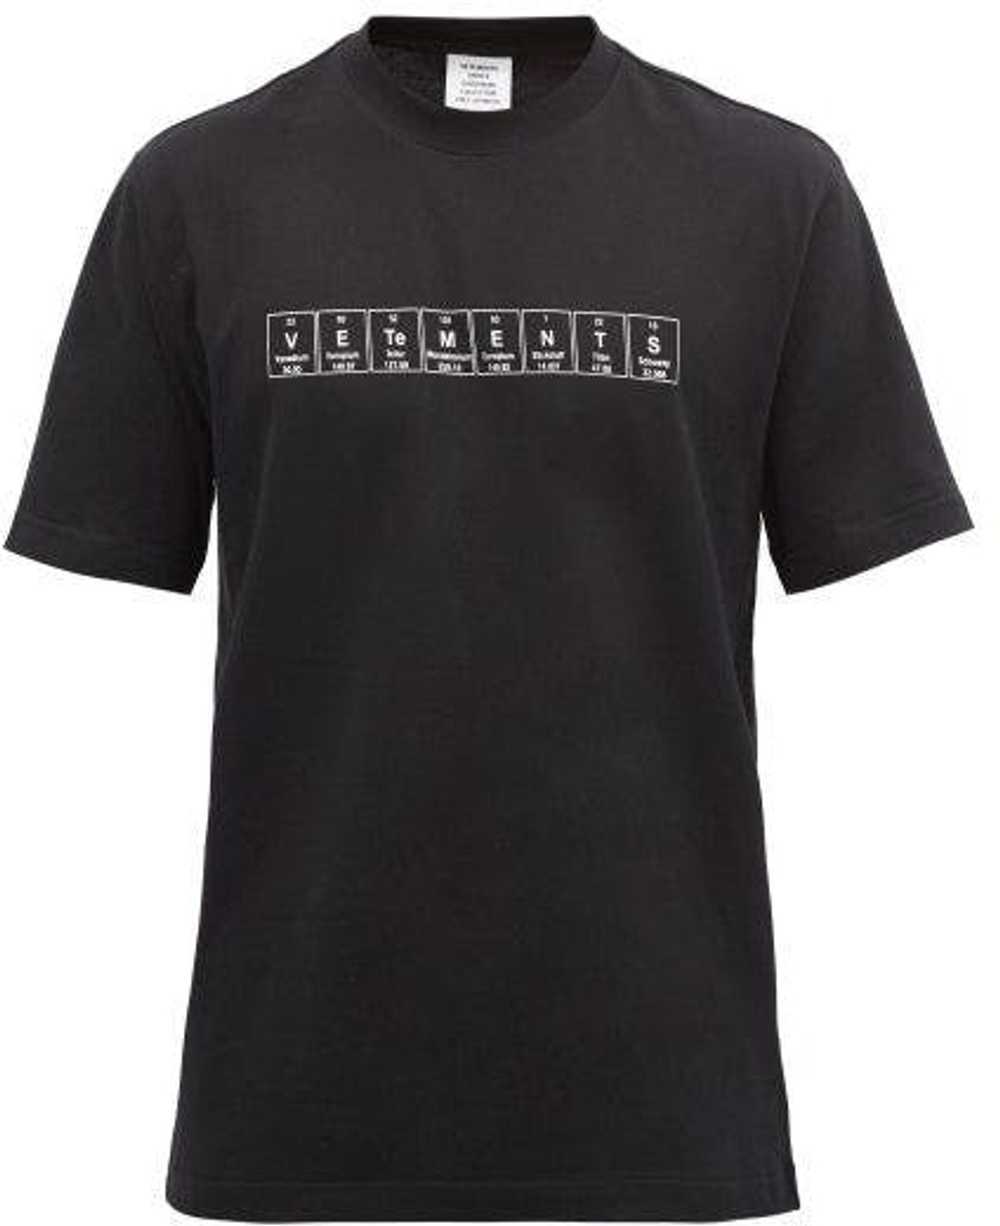 Vetements Vetements black chemical logo T shirt - image 1